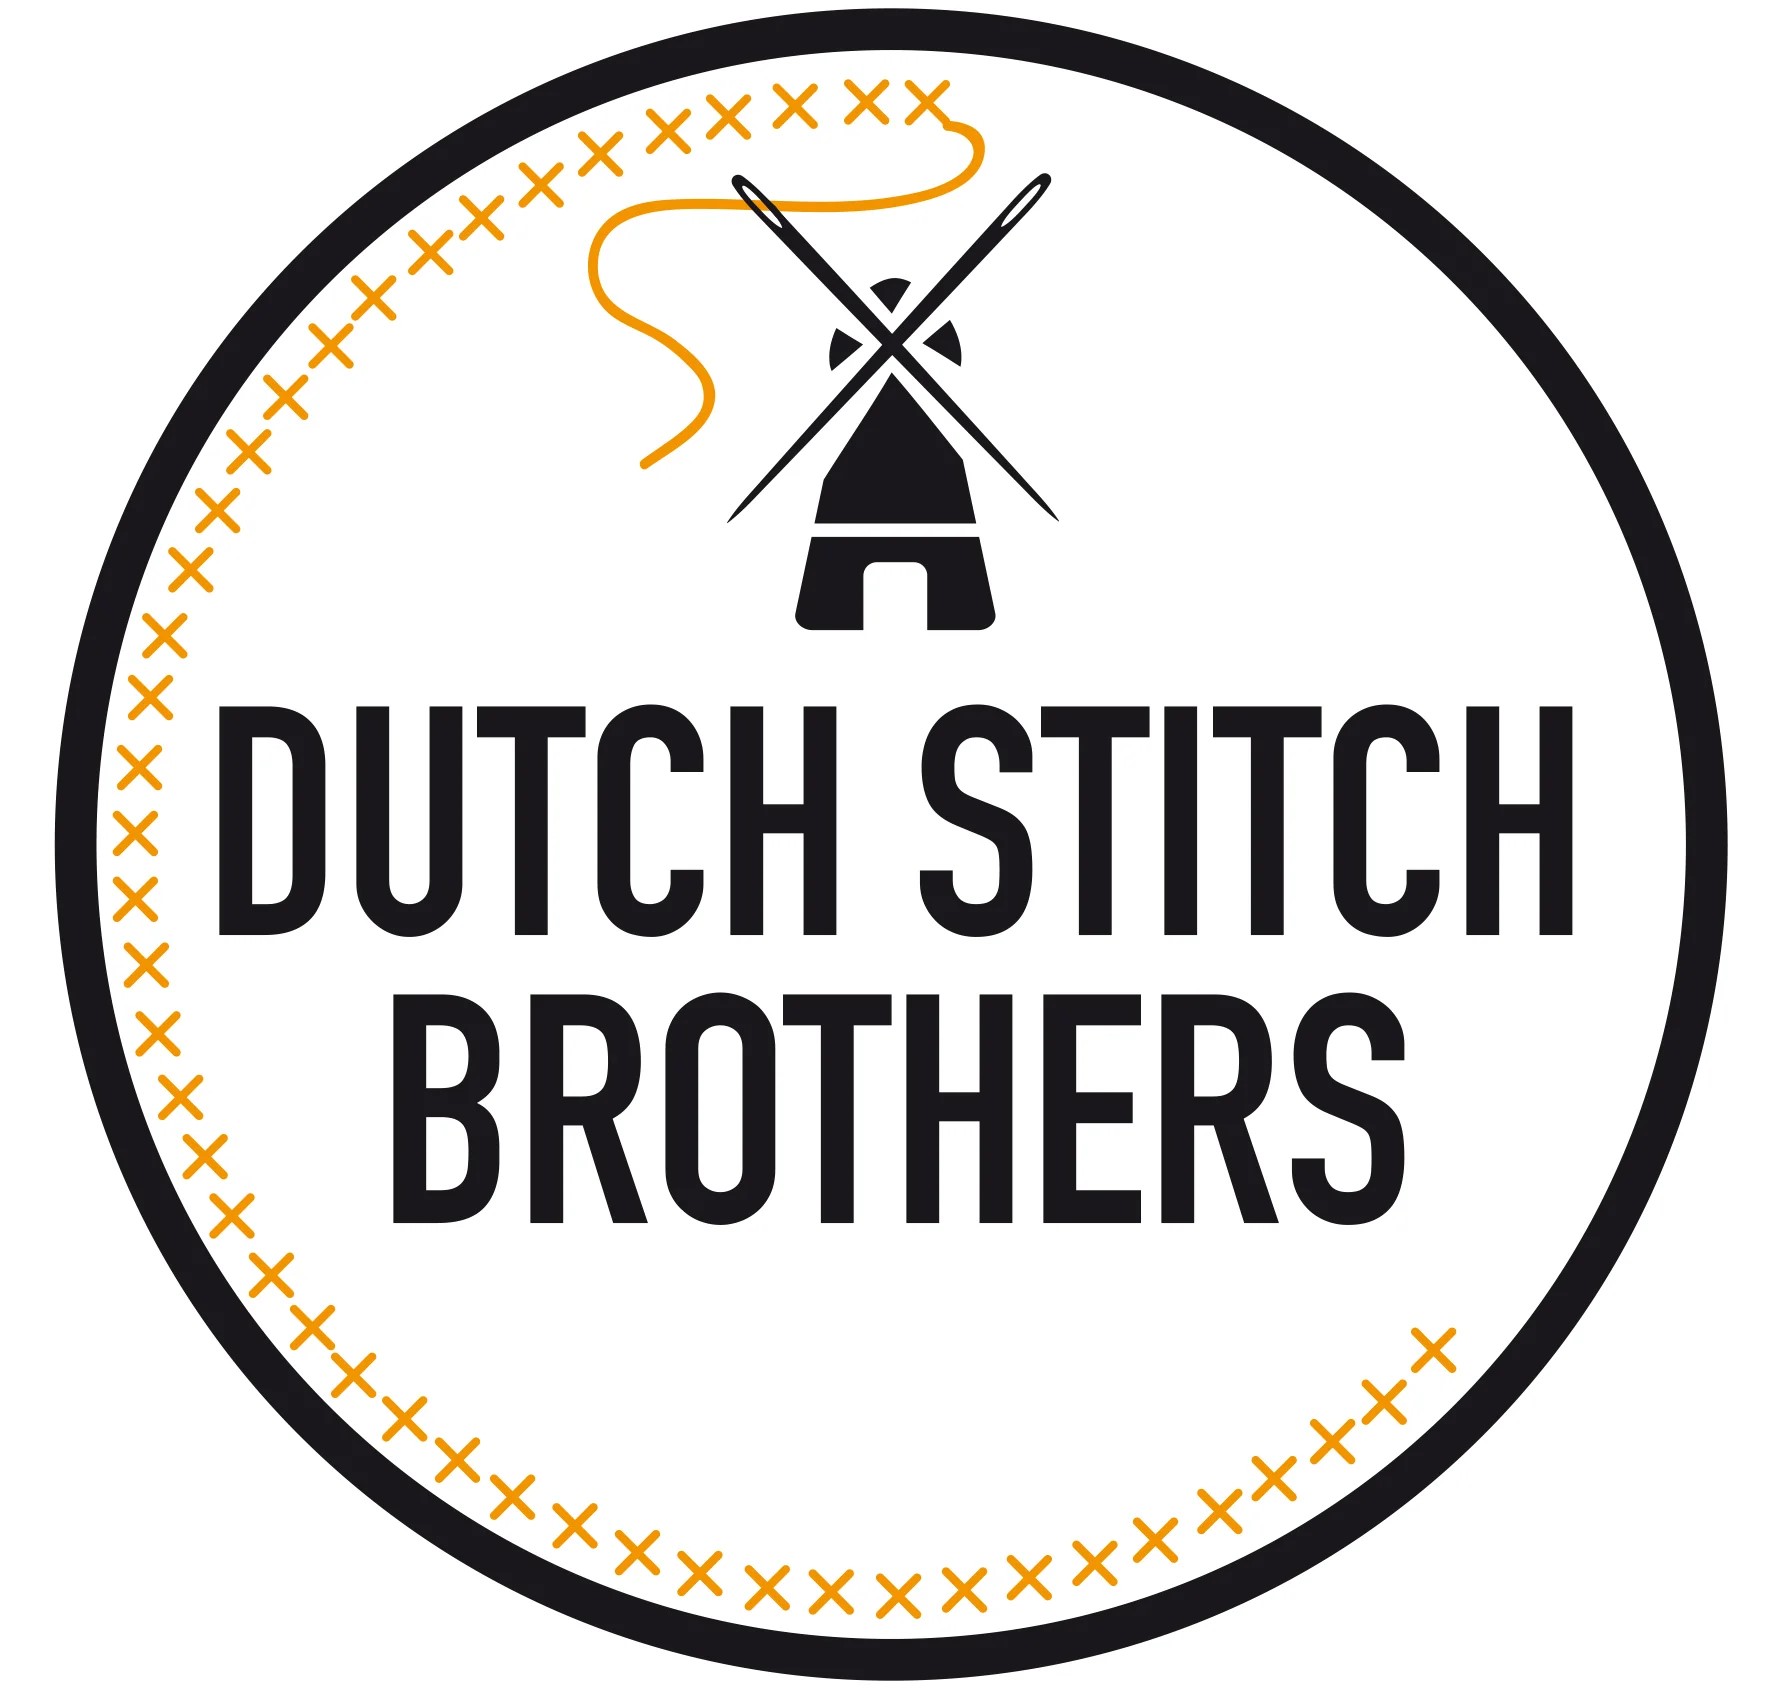 Dutch Stitch Brothers